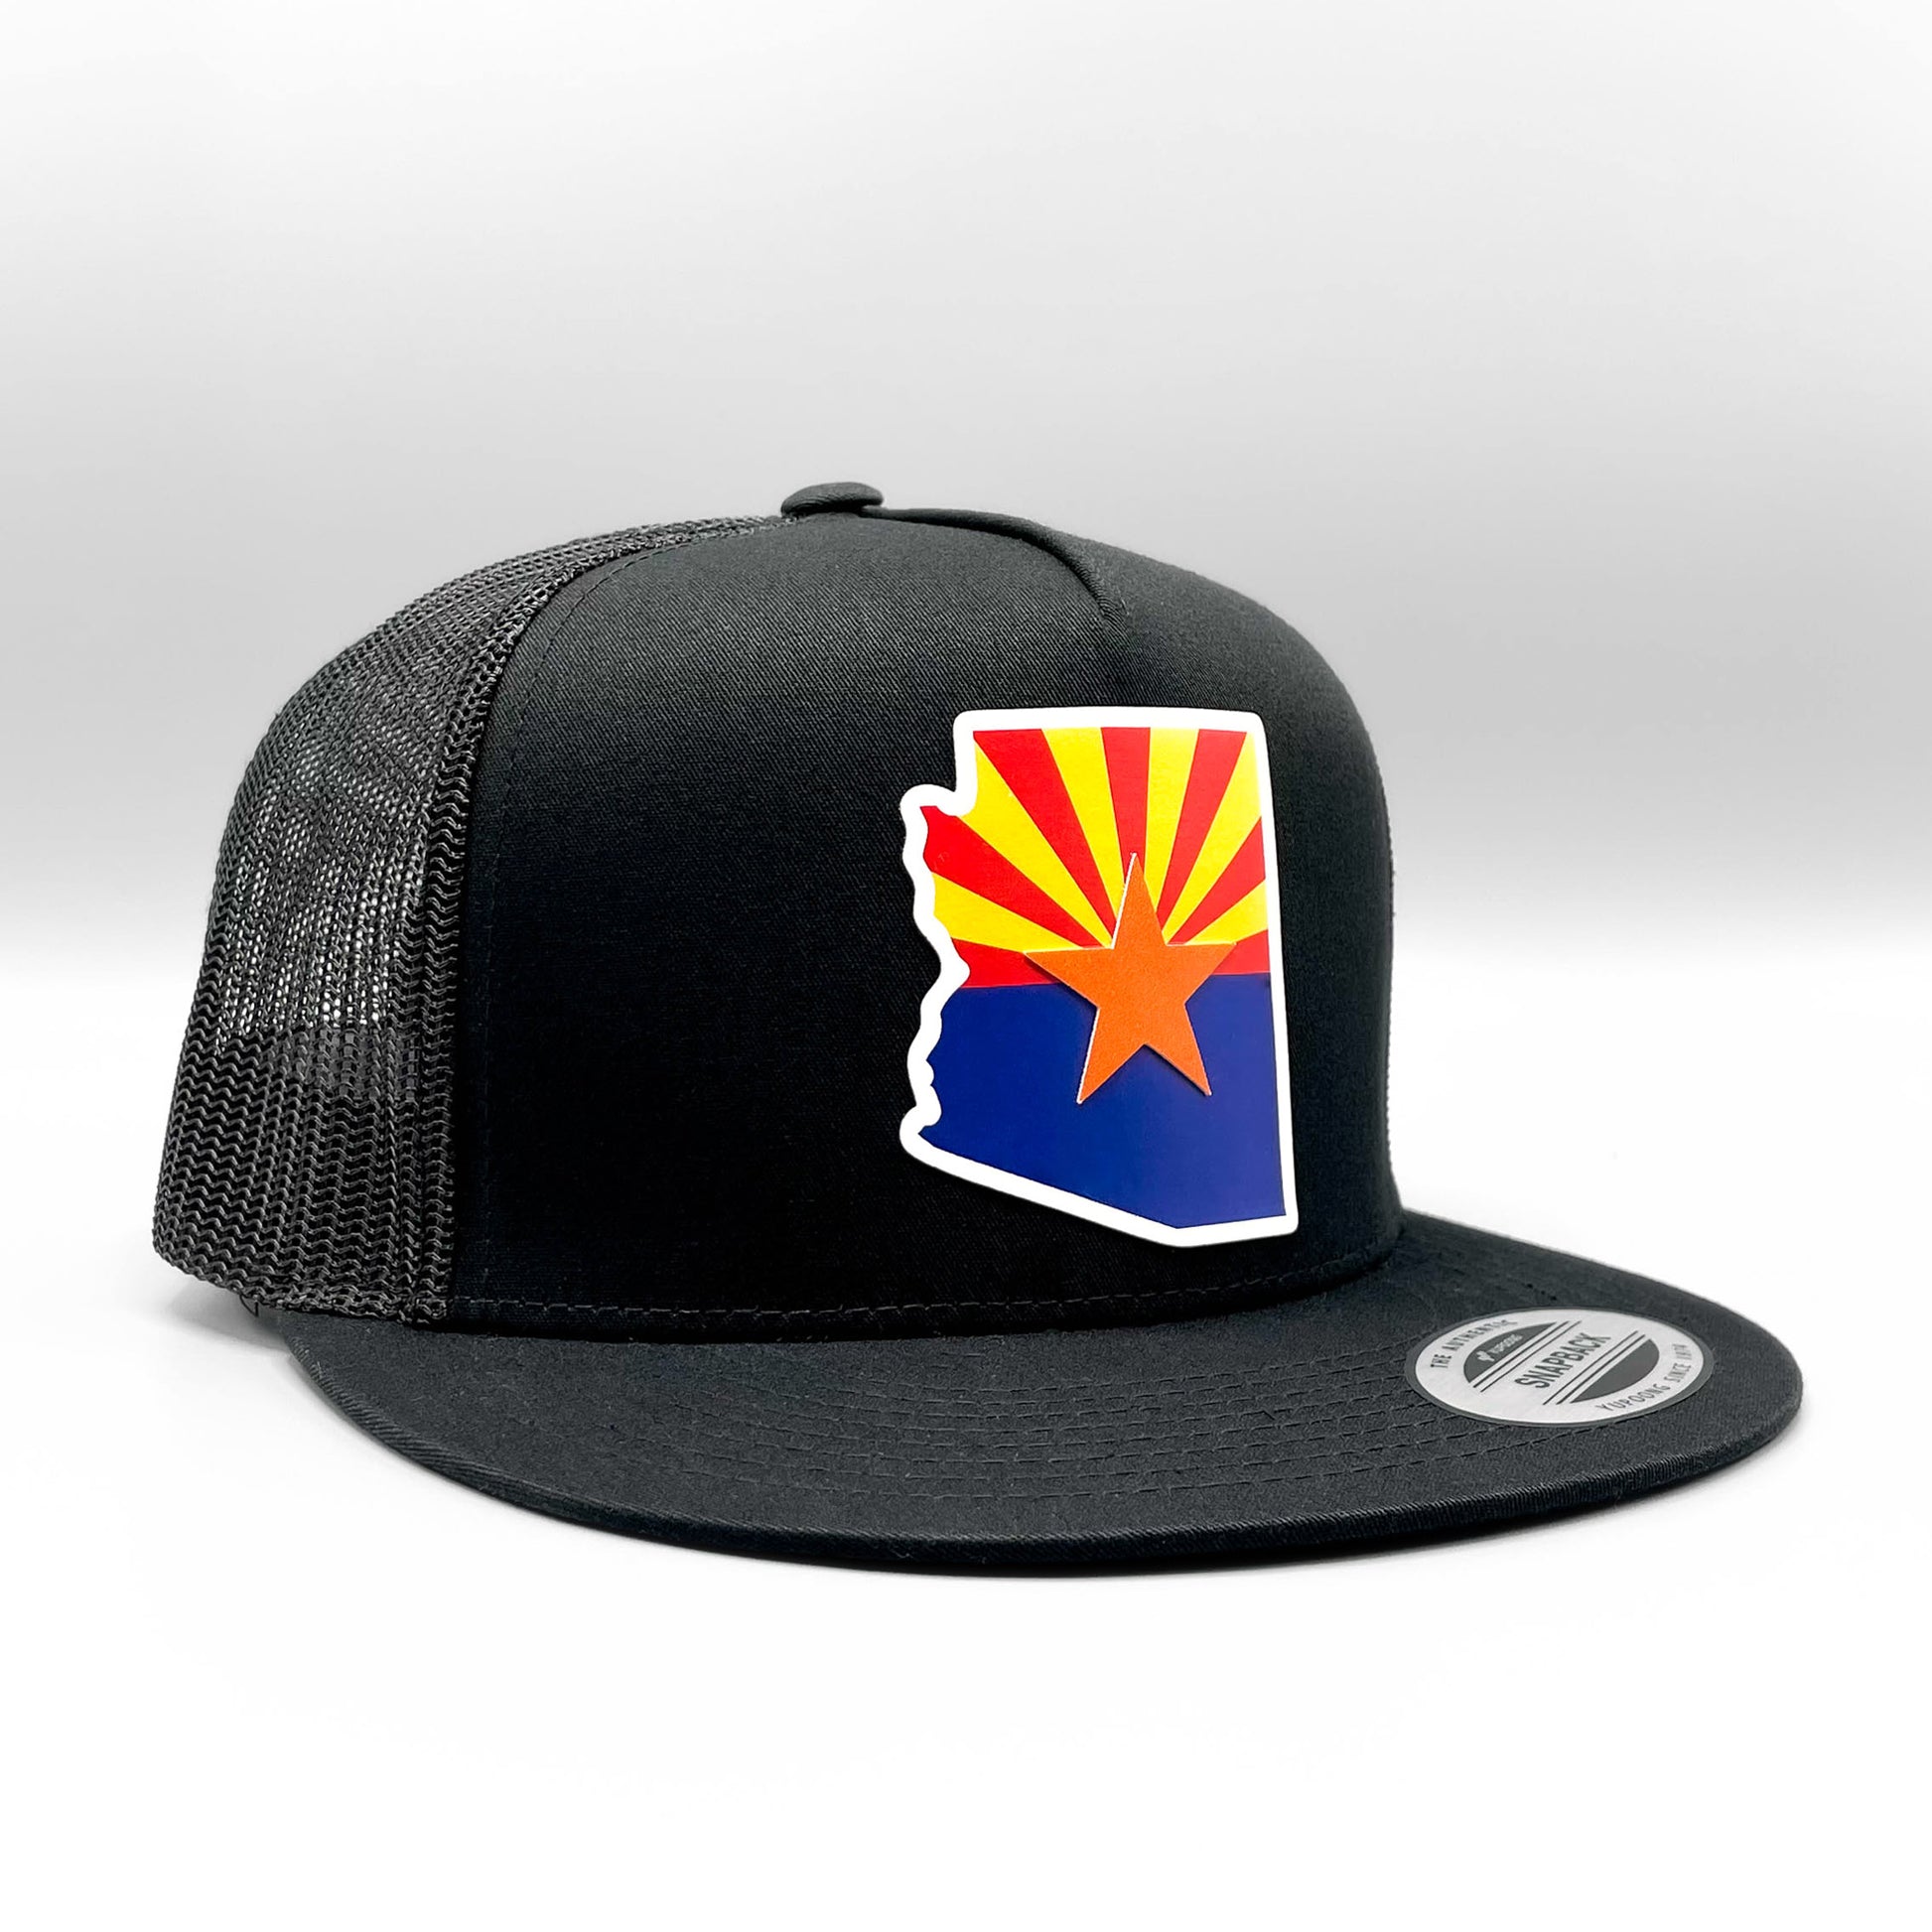 Arizona State Flag Retro Trucker Hat, Arizona Wildcats Sun Devils Gameday Gift